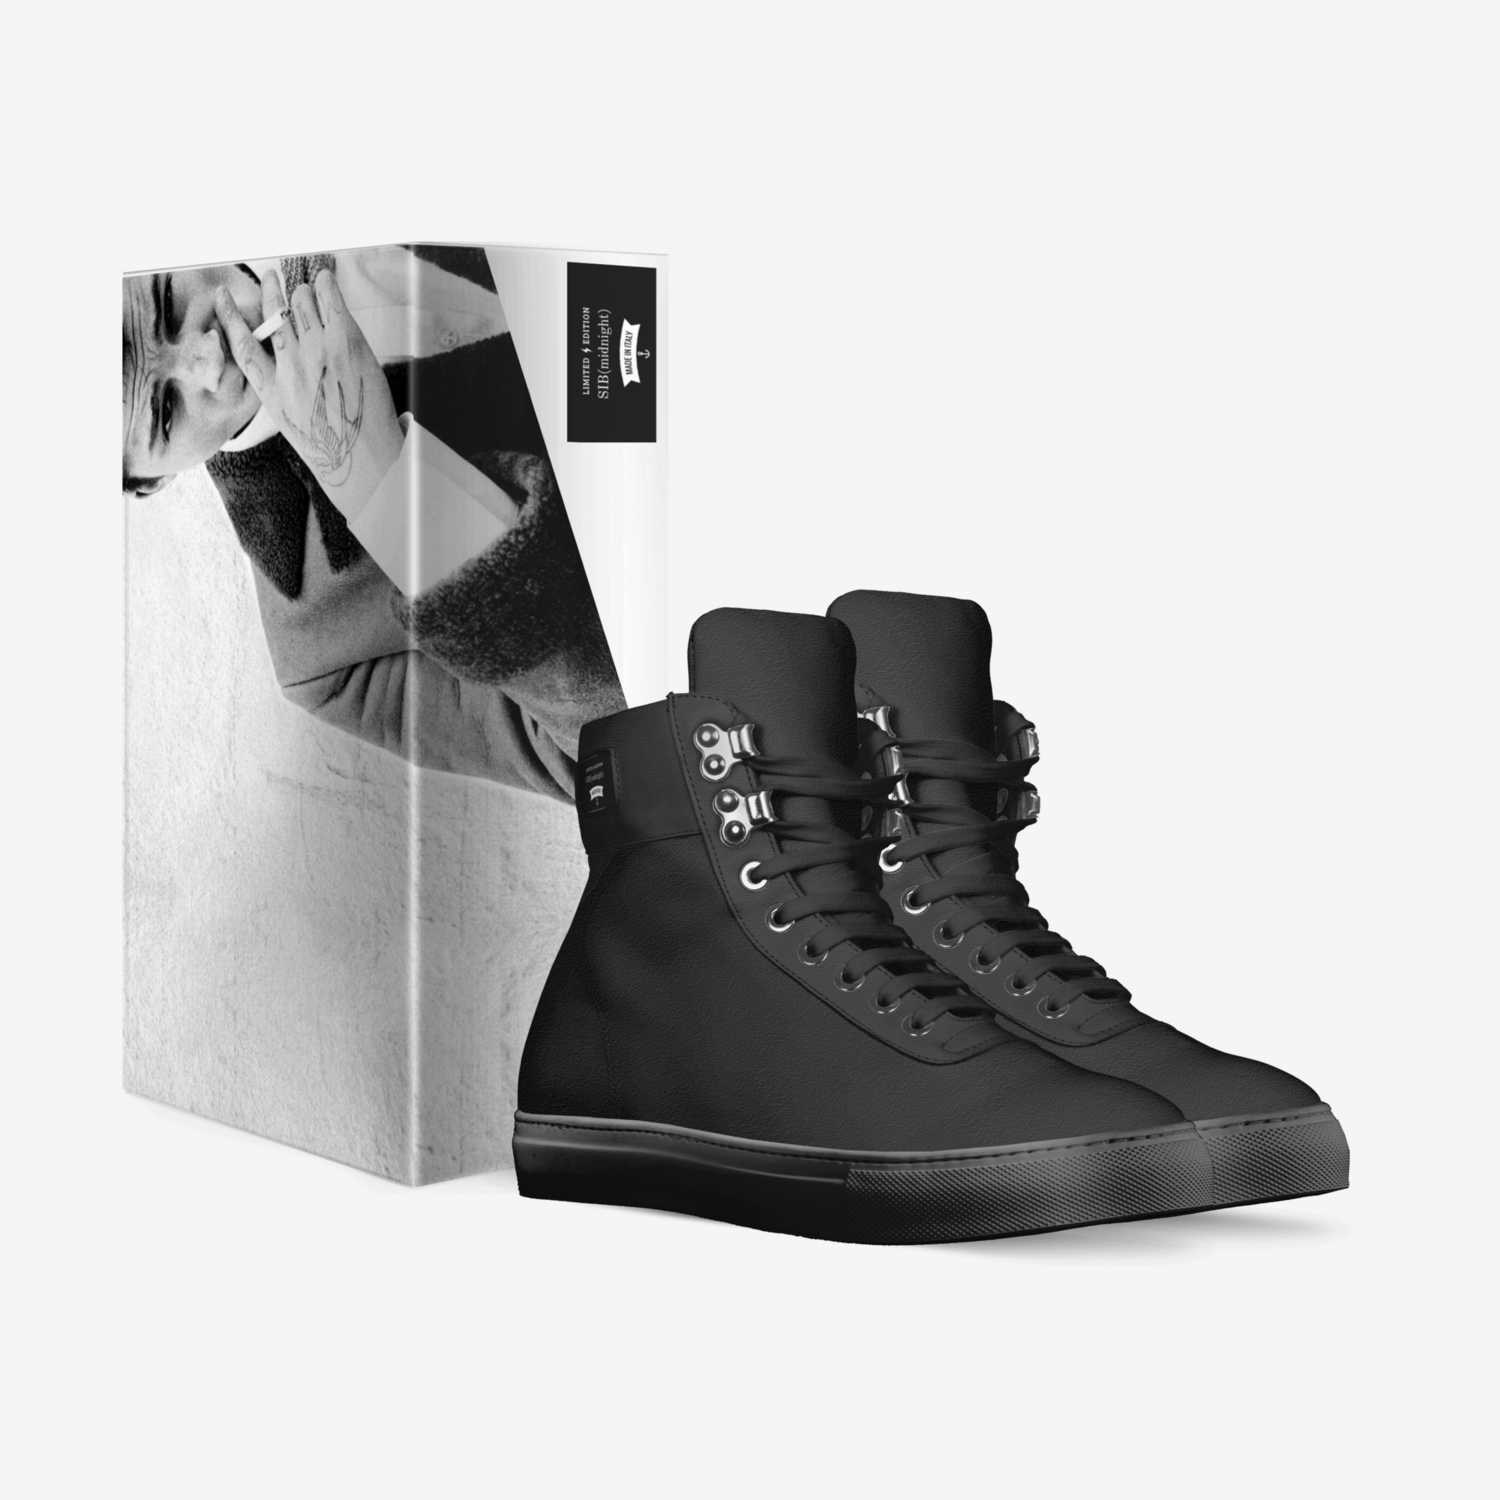 SIB(midnight) custom made in Italy shoes by Stefanie Black | Box view